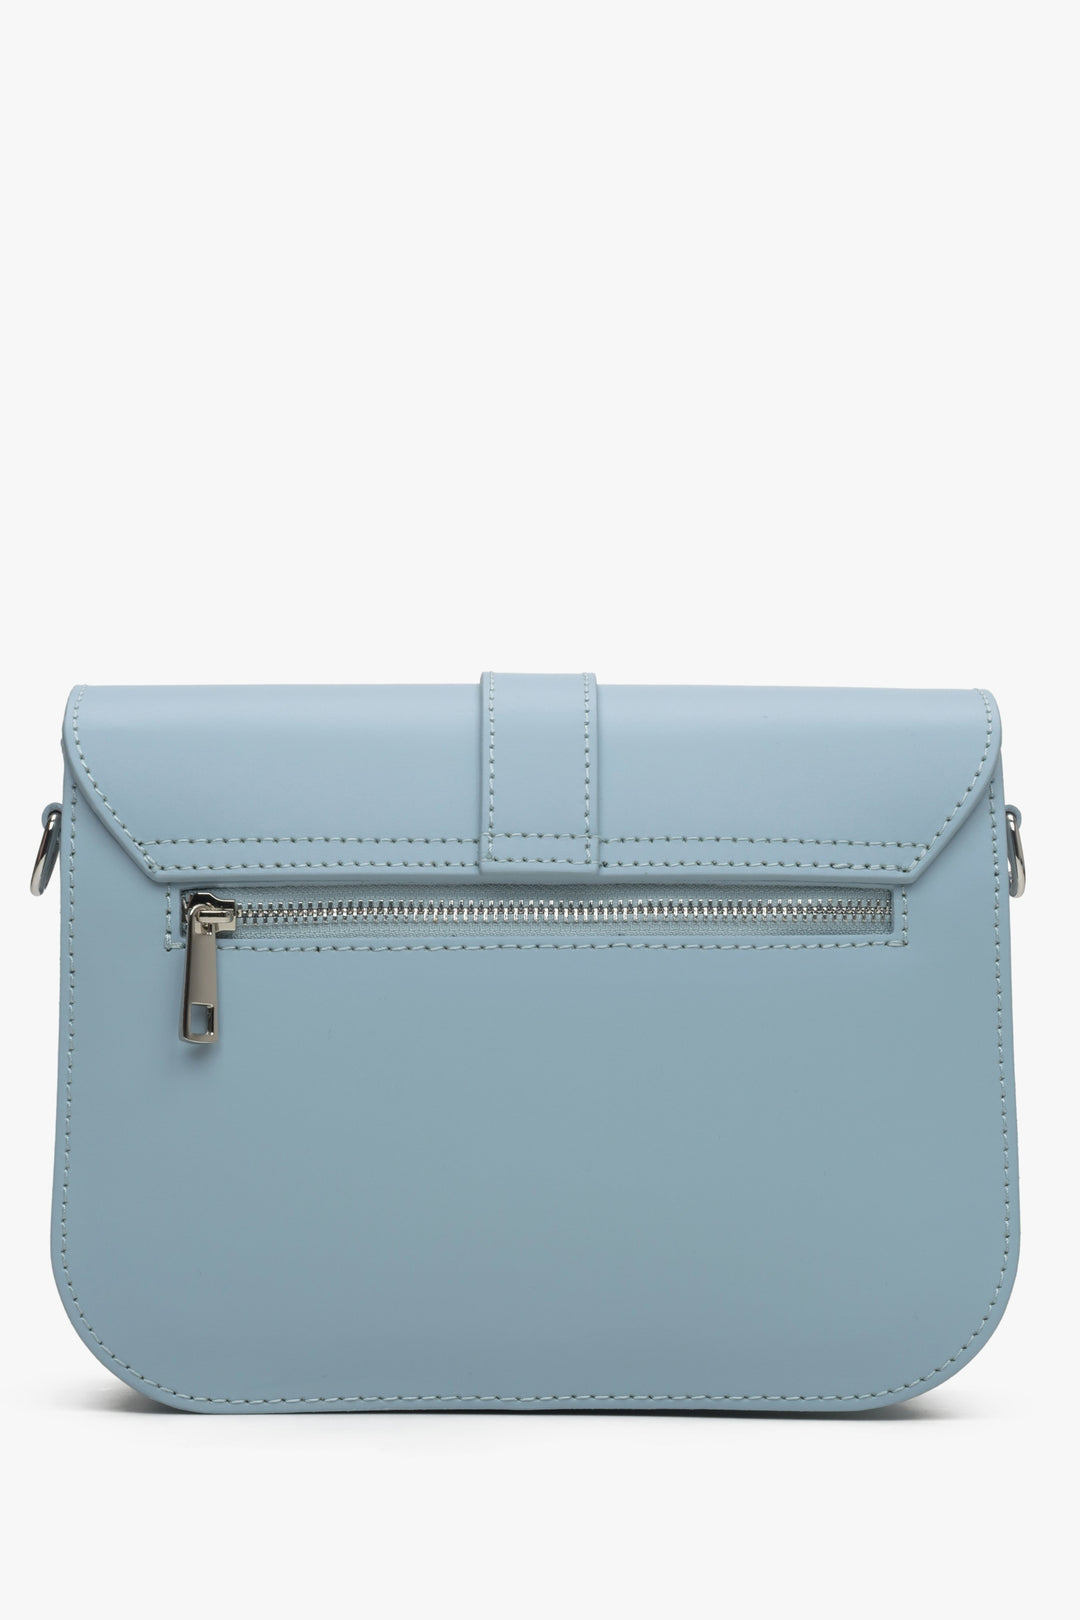 Women's blue handbag made of genuine leather by Estro - reverse side.